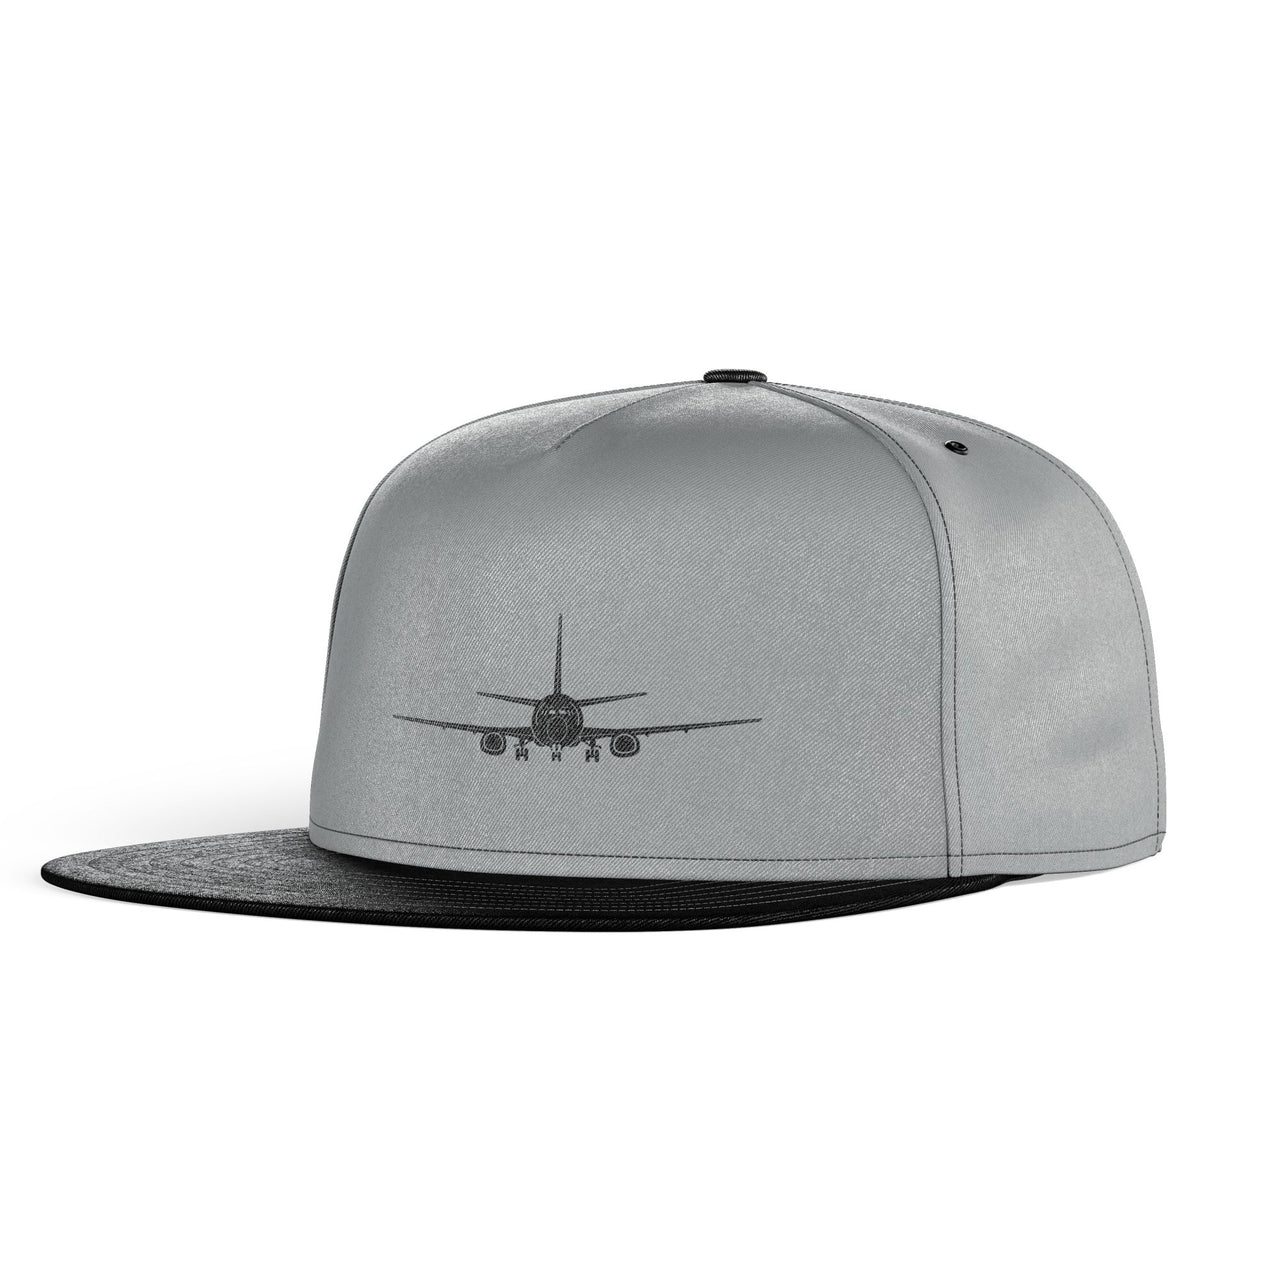 Boeing 737 Silhouette Designed Snapback Caps & Hats